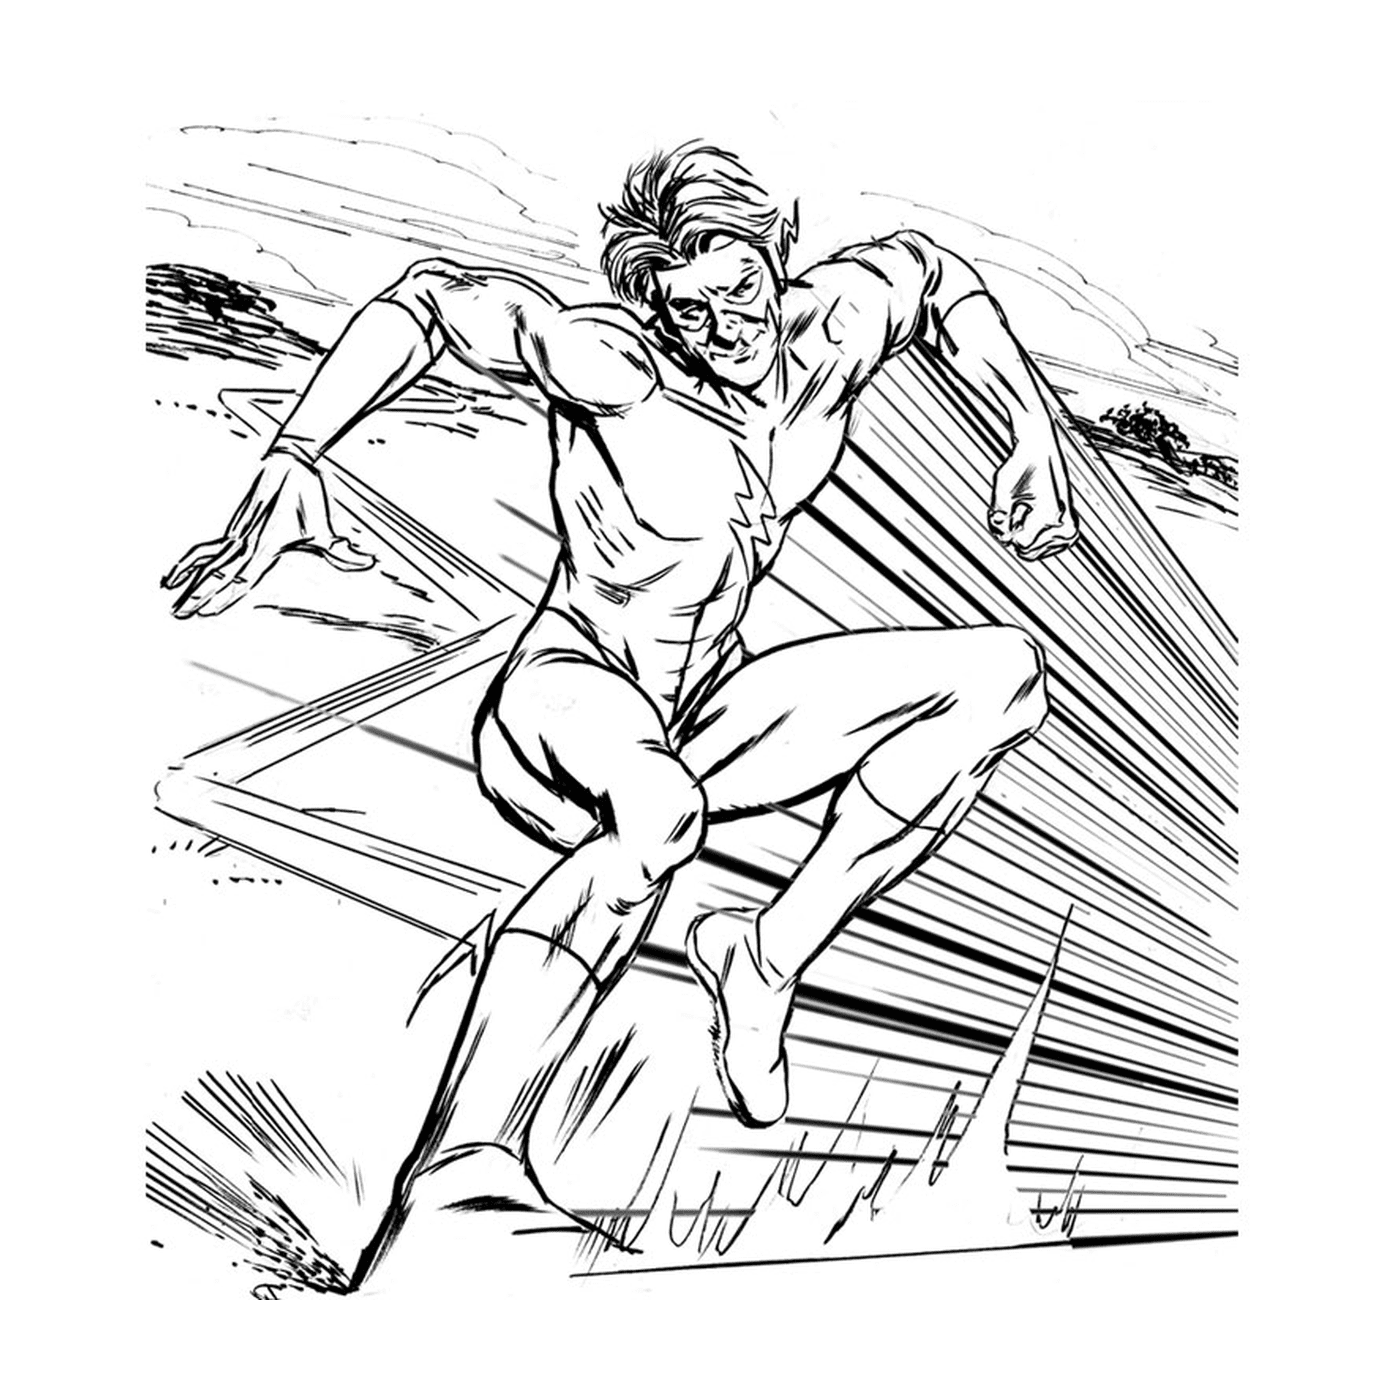  Flash, superhero, running after Iron Man 